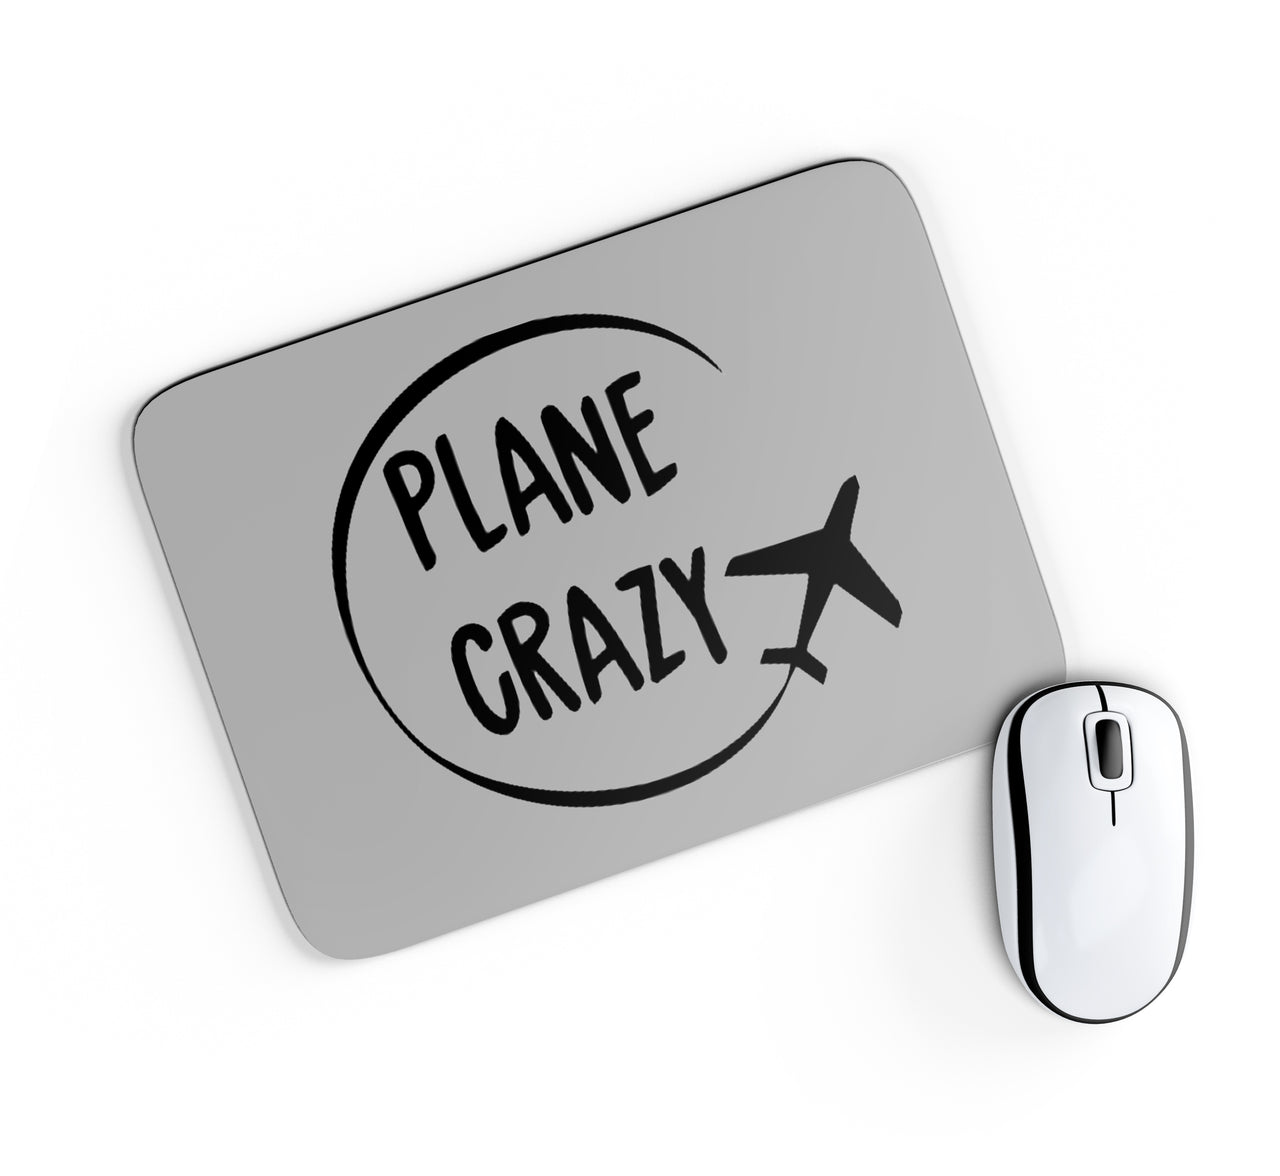 Plane Crazy Designed Mouse Pads